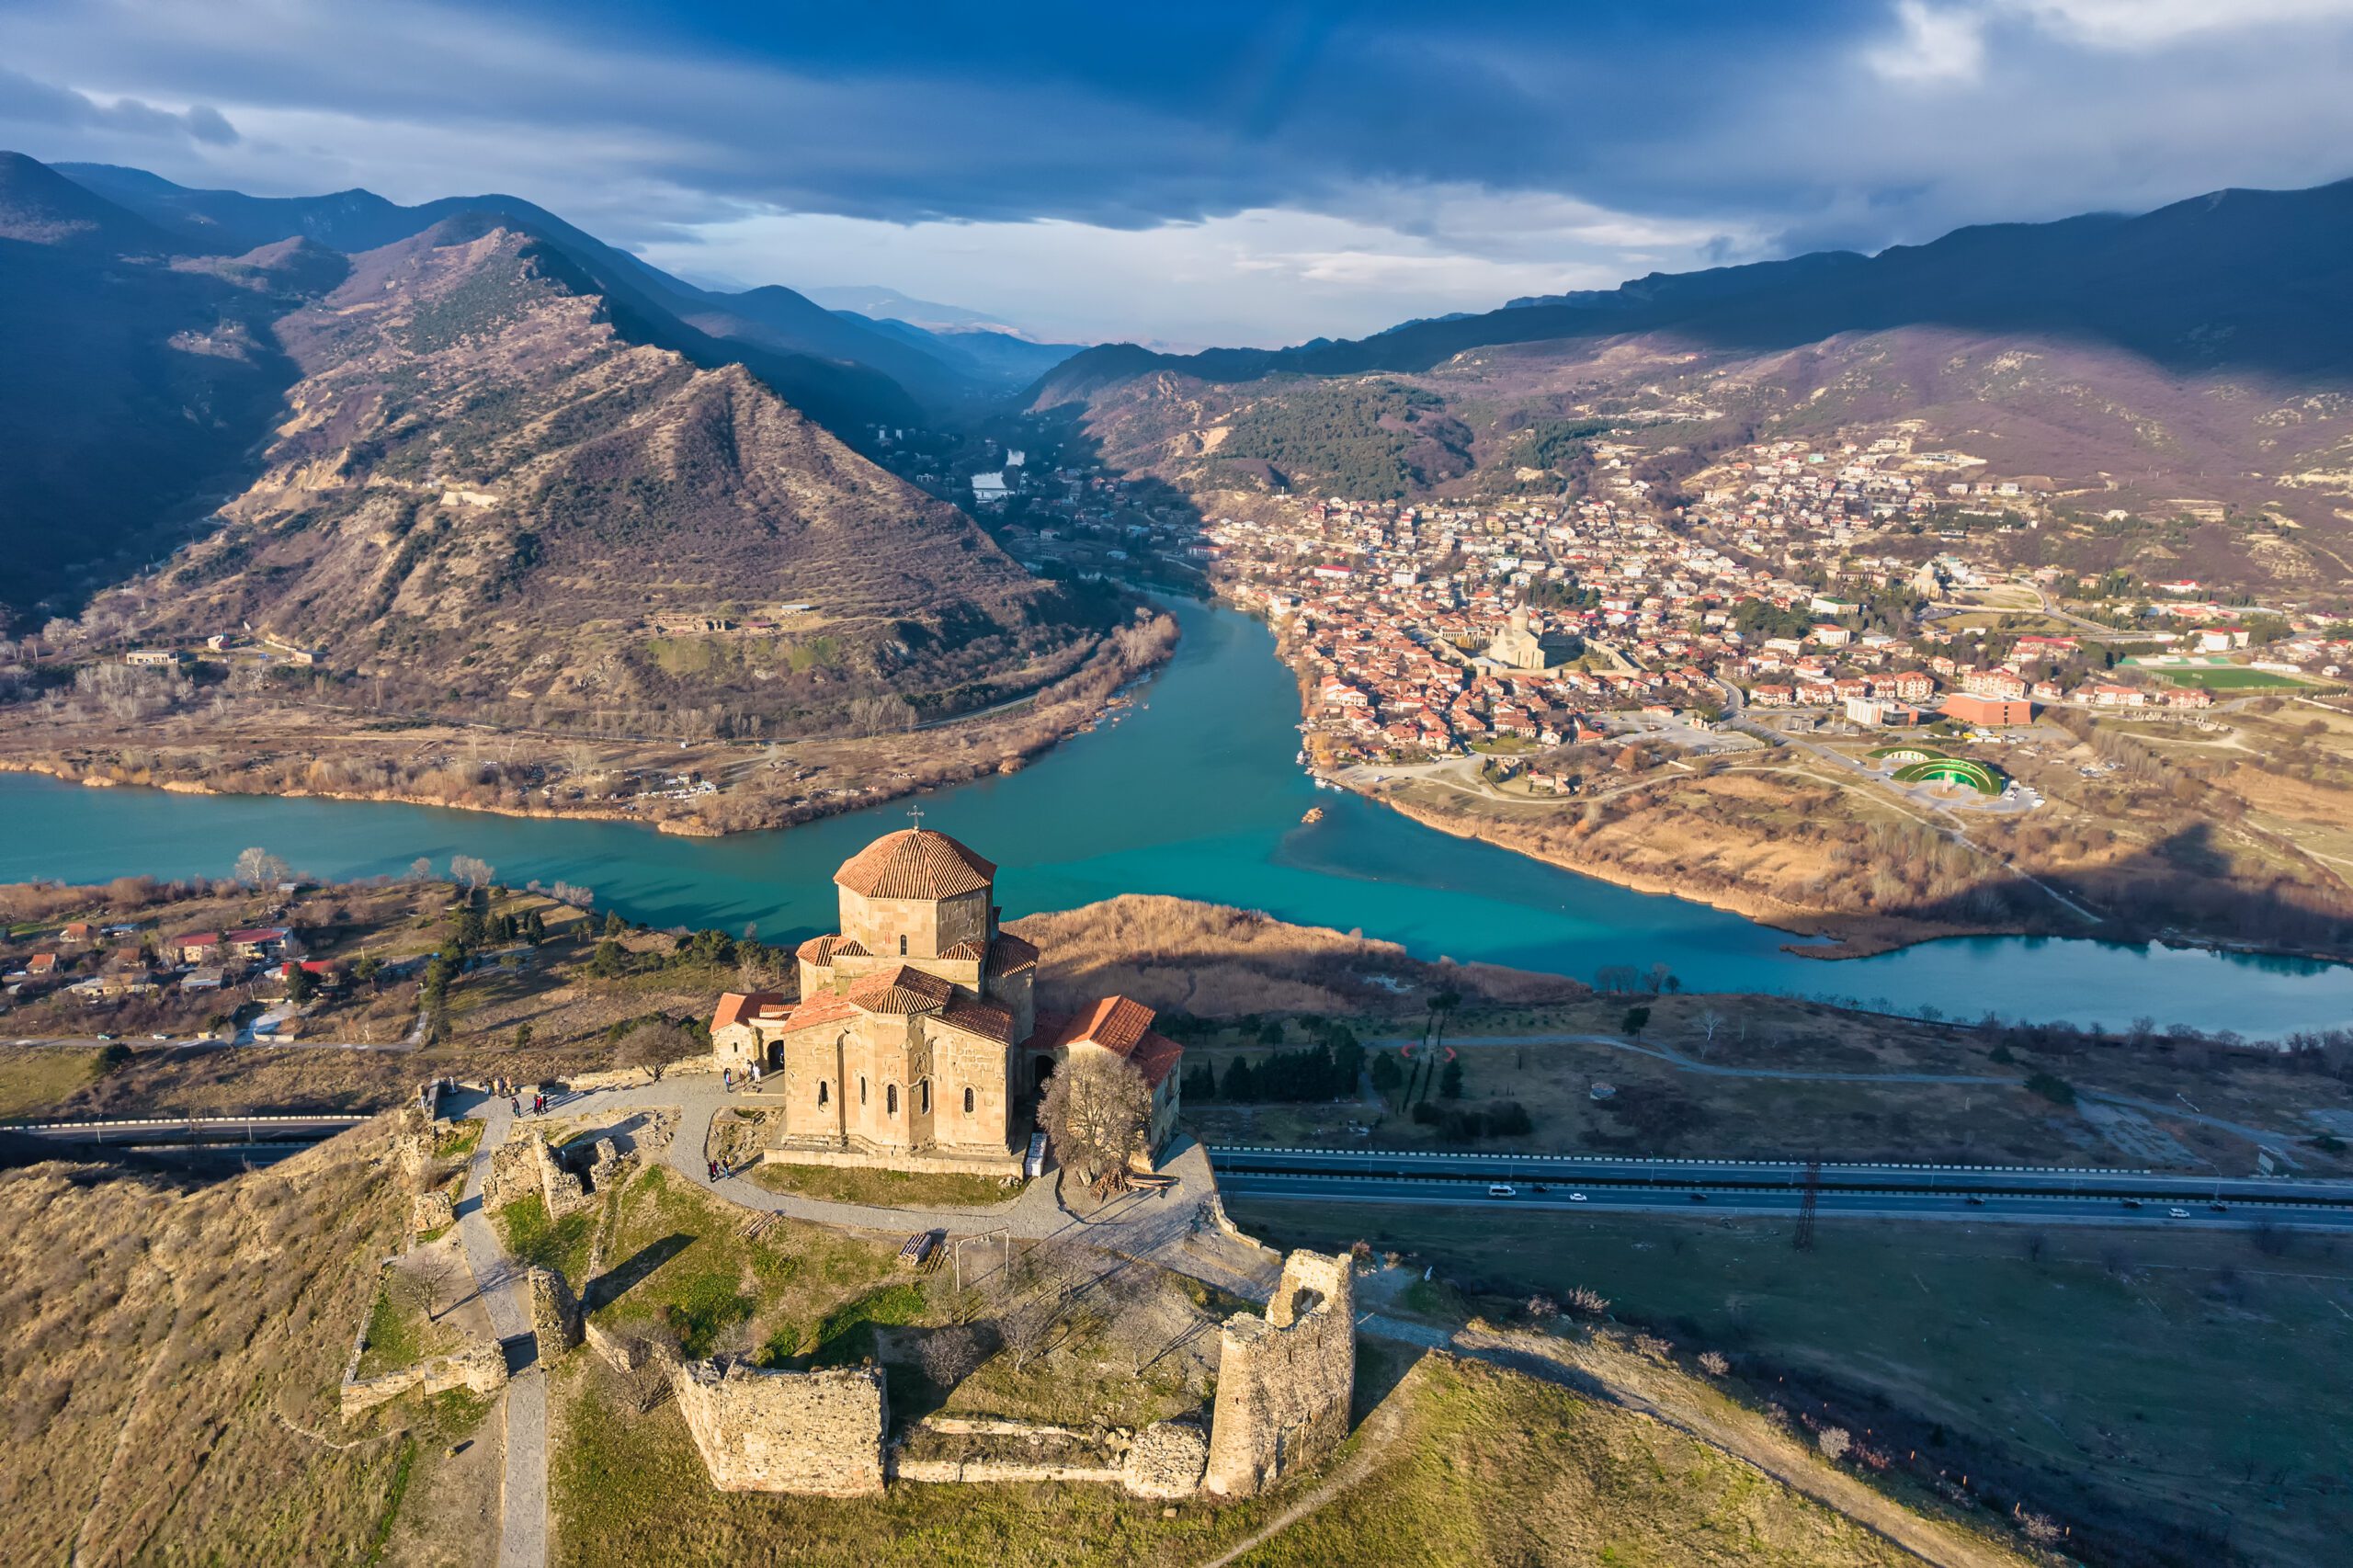 Famous aerial  Jvari Monastery view in Mtskheta town near Tbilisi, Georgia